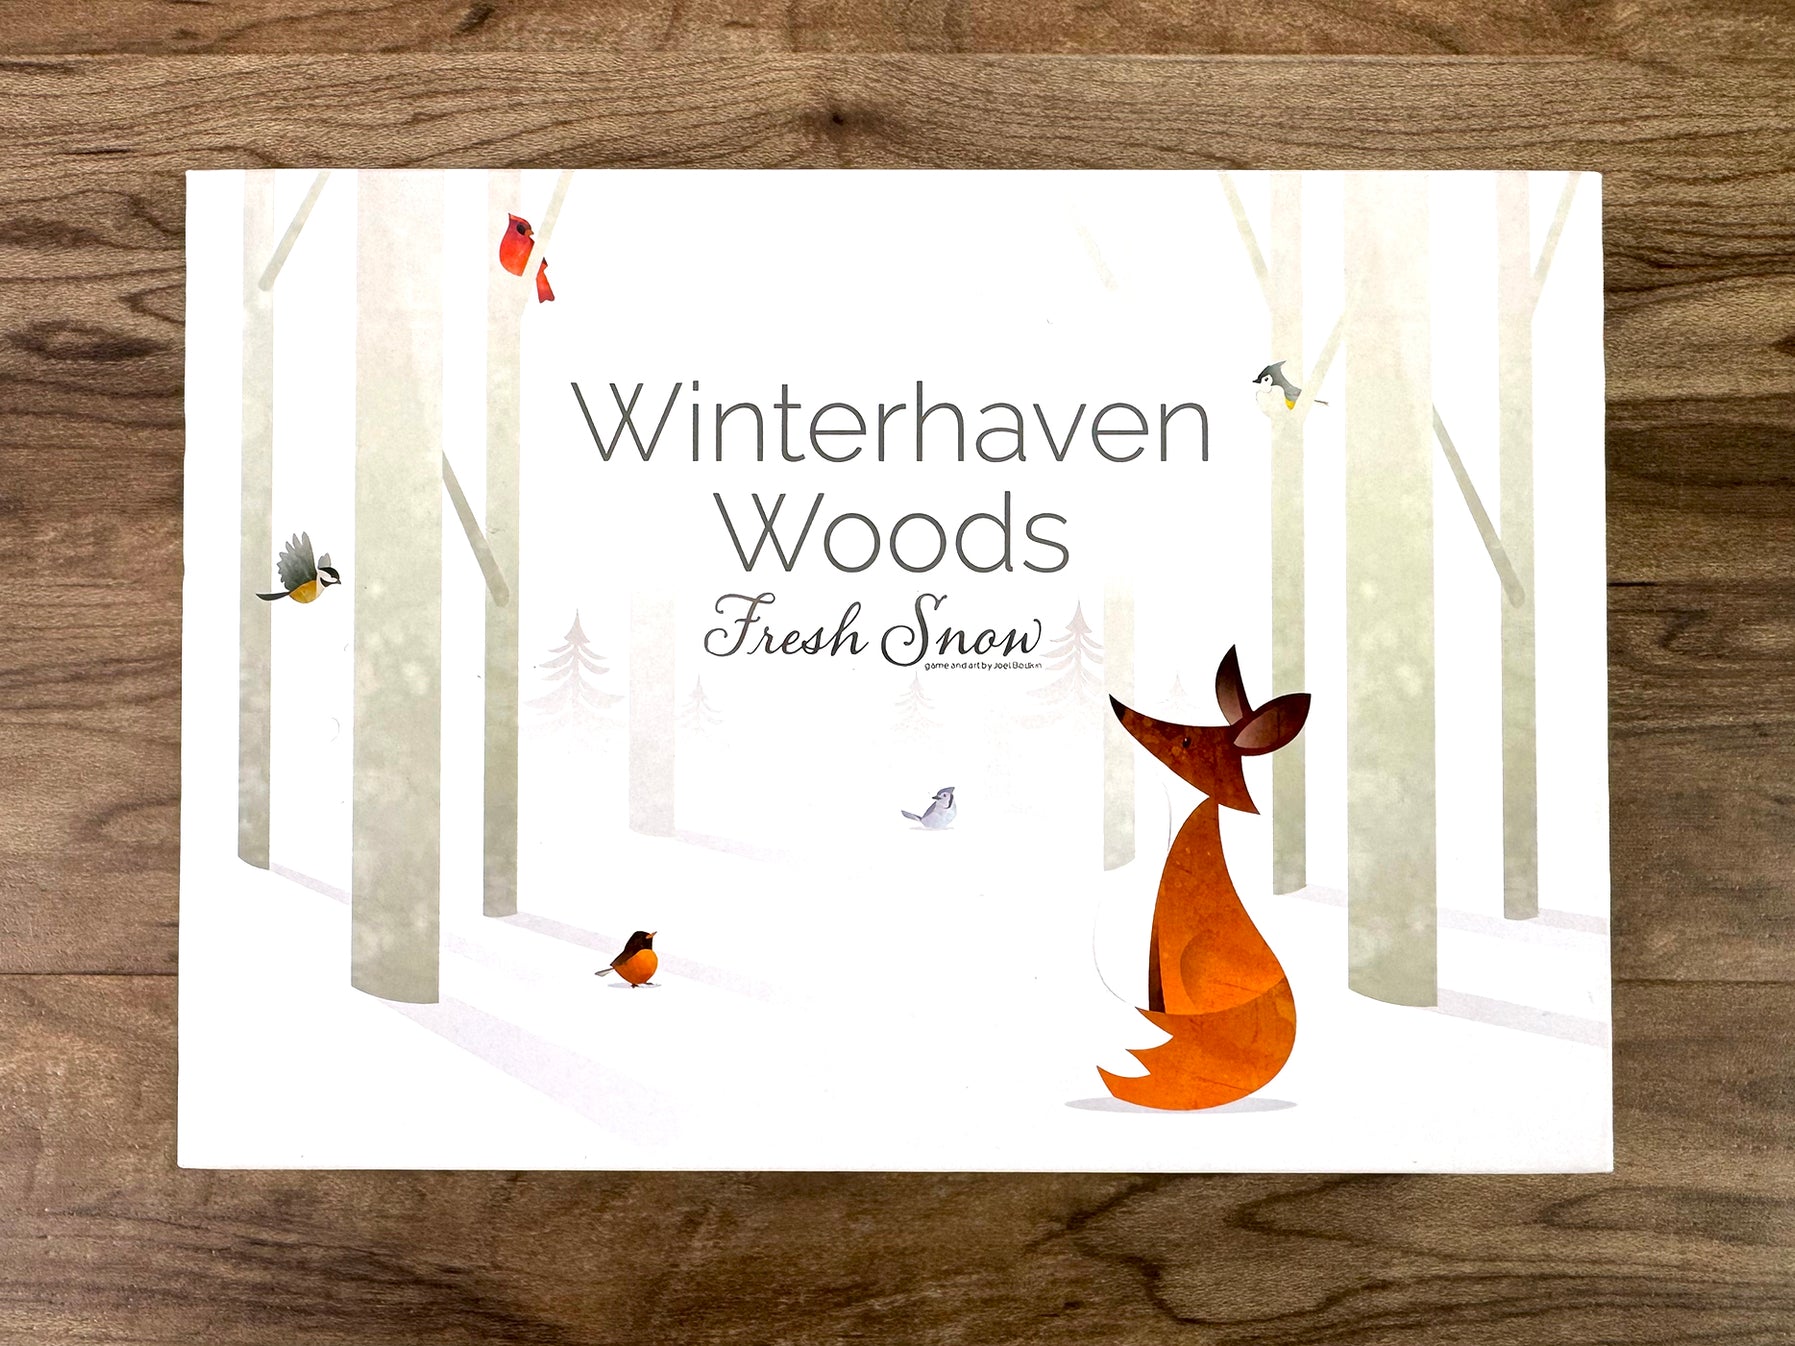 Winterhaven Woods: Fresh Snow